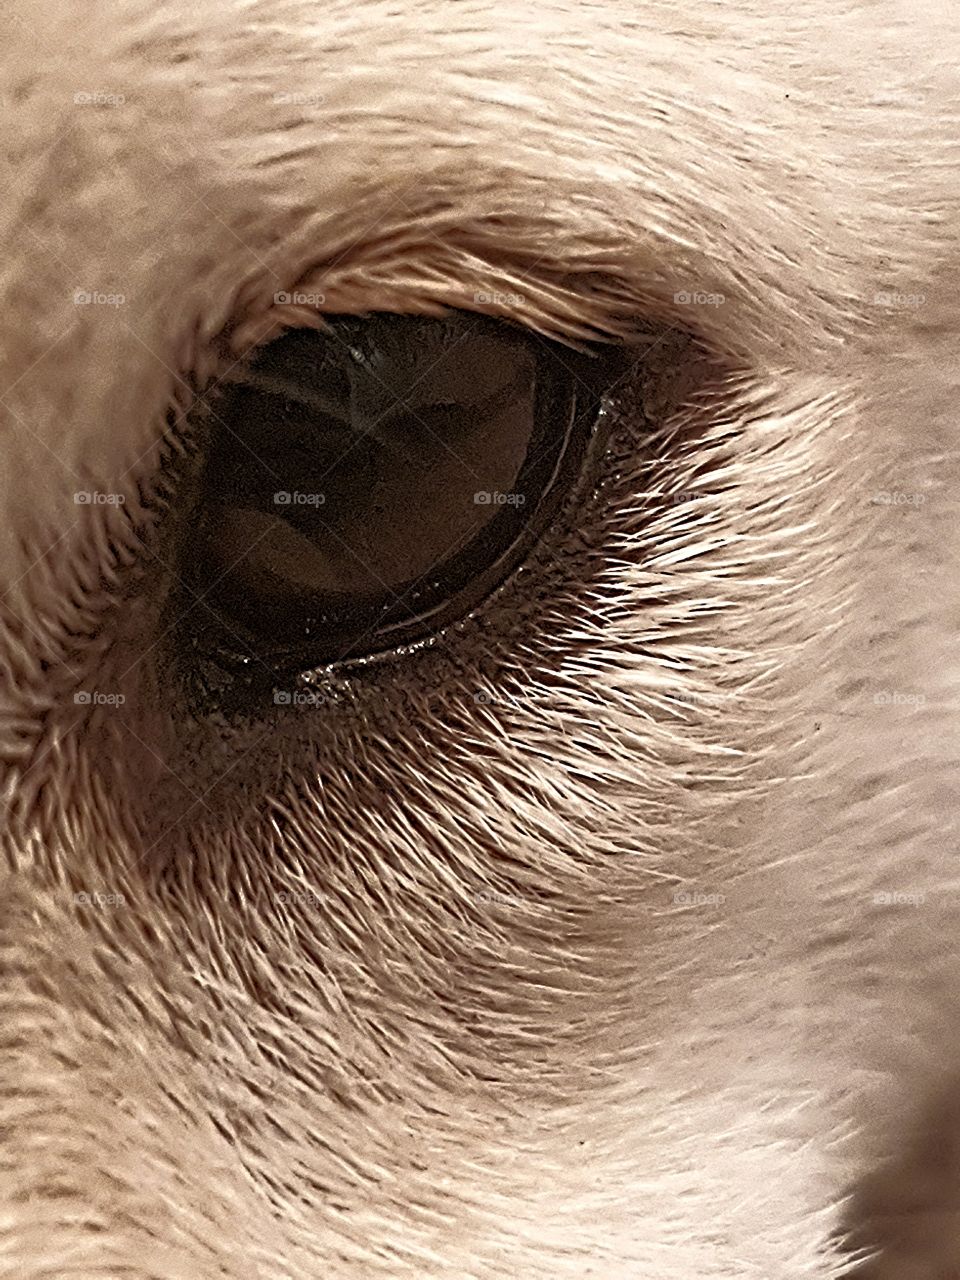 Dogs eye